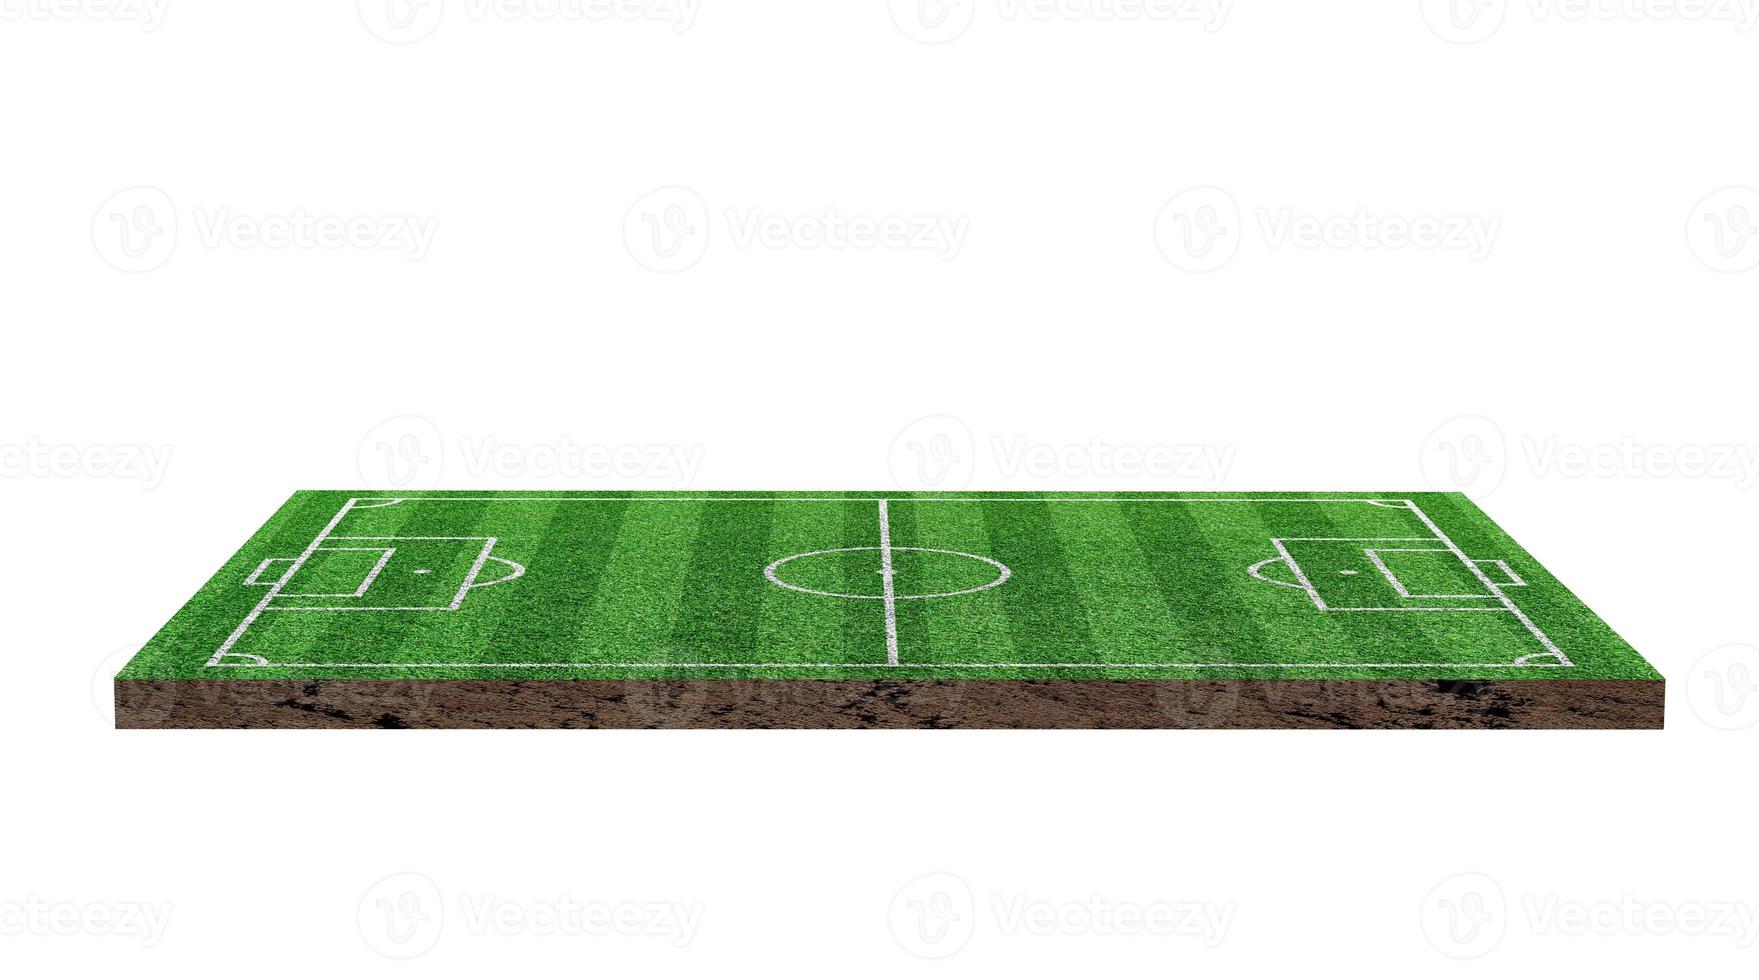 rendu 3d. pelouse de football, terrain de football en herbe verte, isolé sur fond blanc. photo